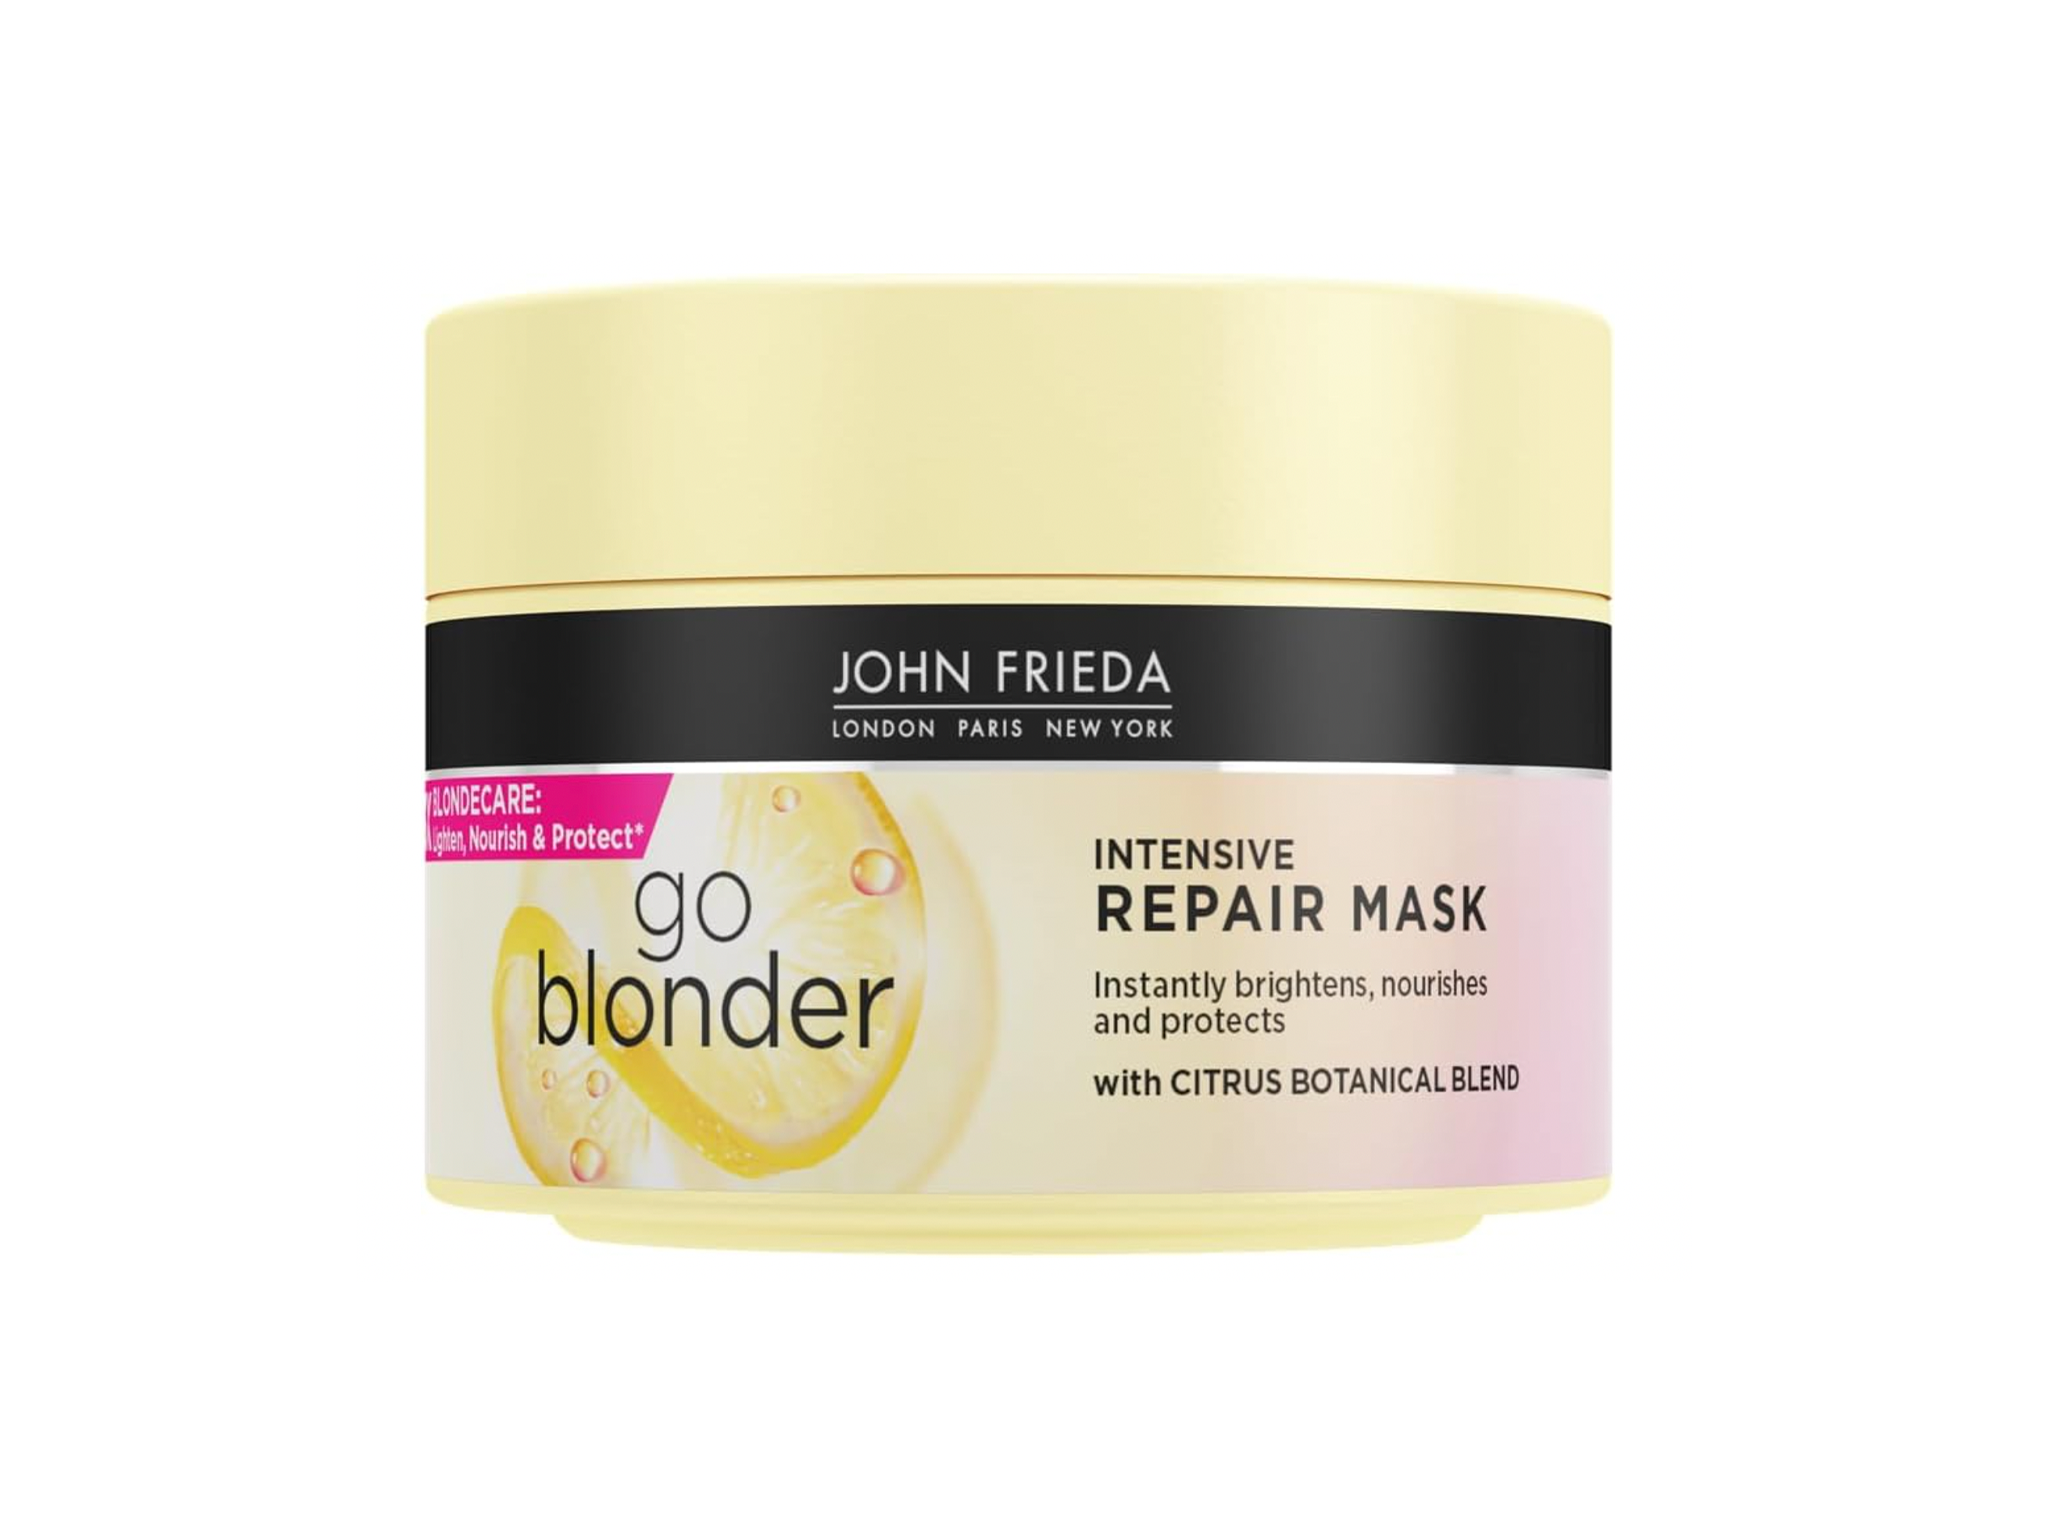 John Frieda sheer blonde go blonder deep conditioner mask